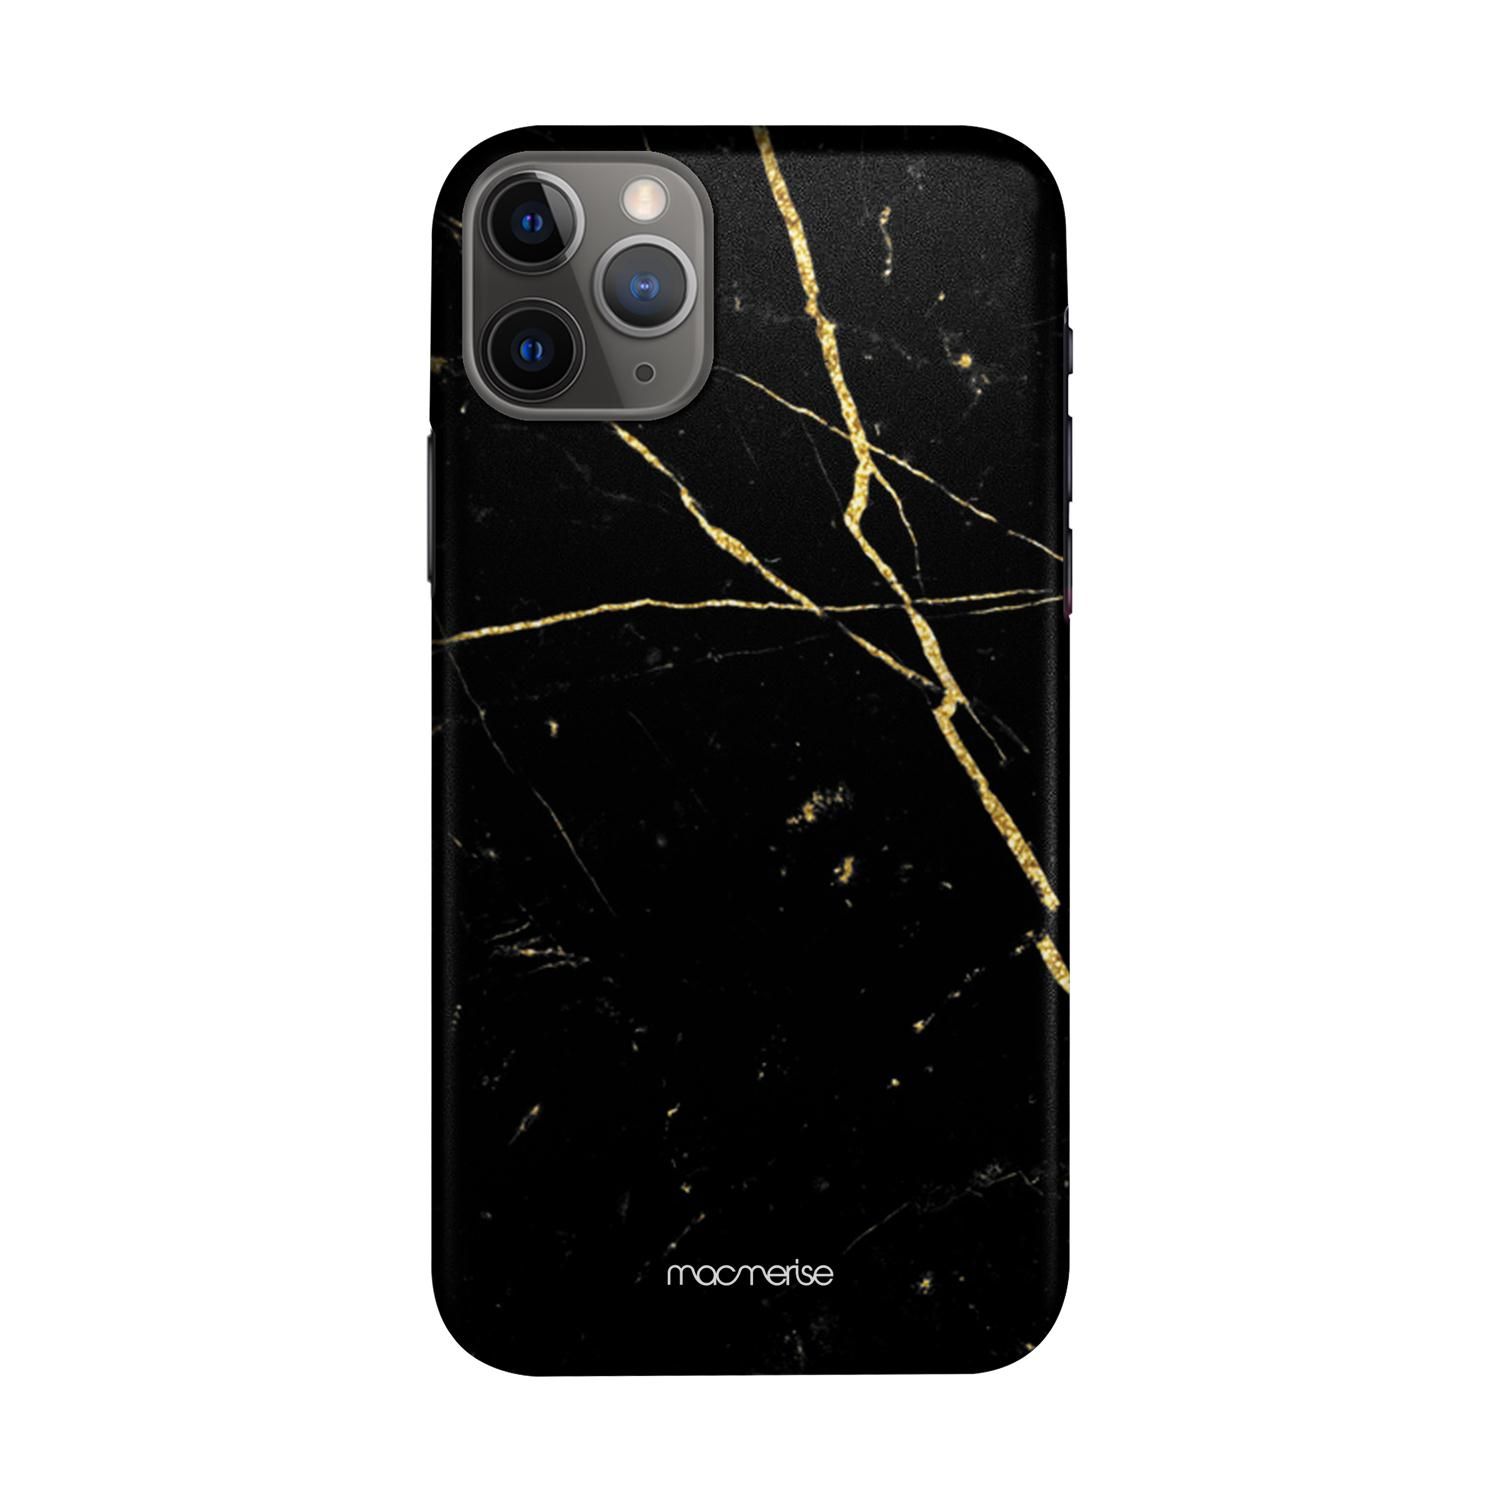 Marble Black Onyx - Sleek Phone Case for iPhone 11 Pro Max